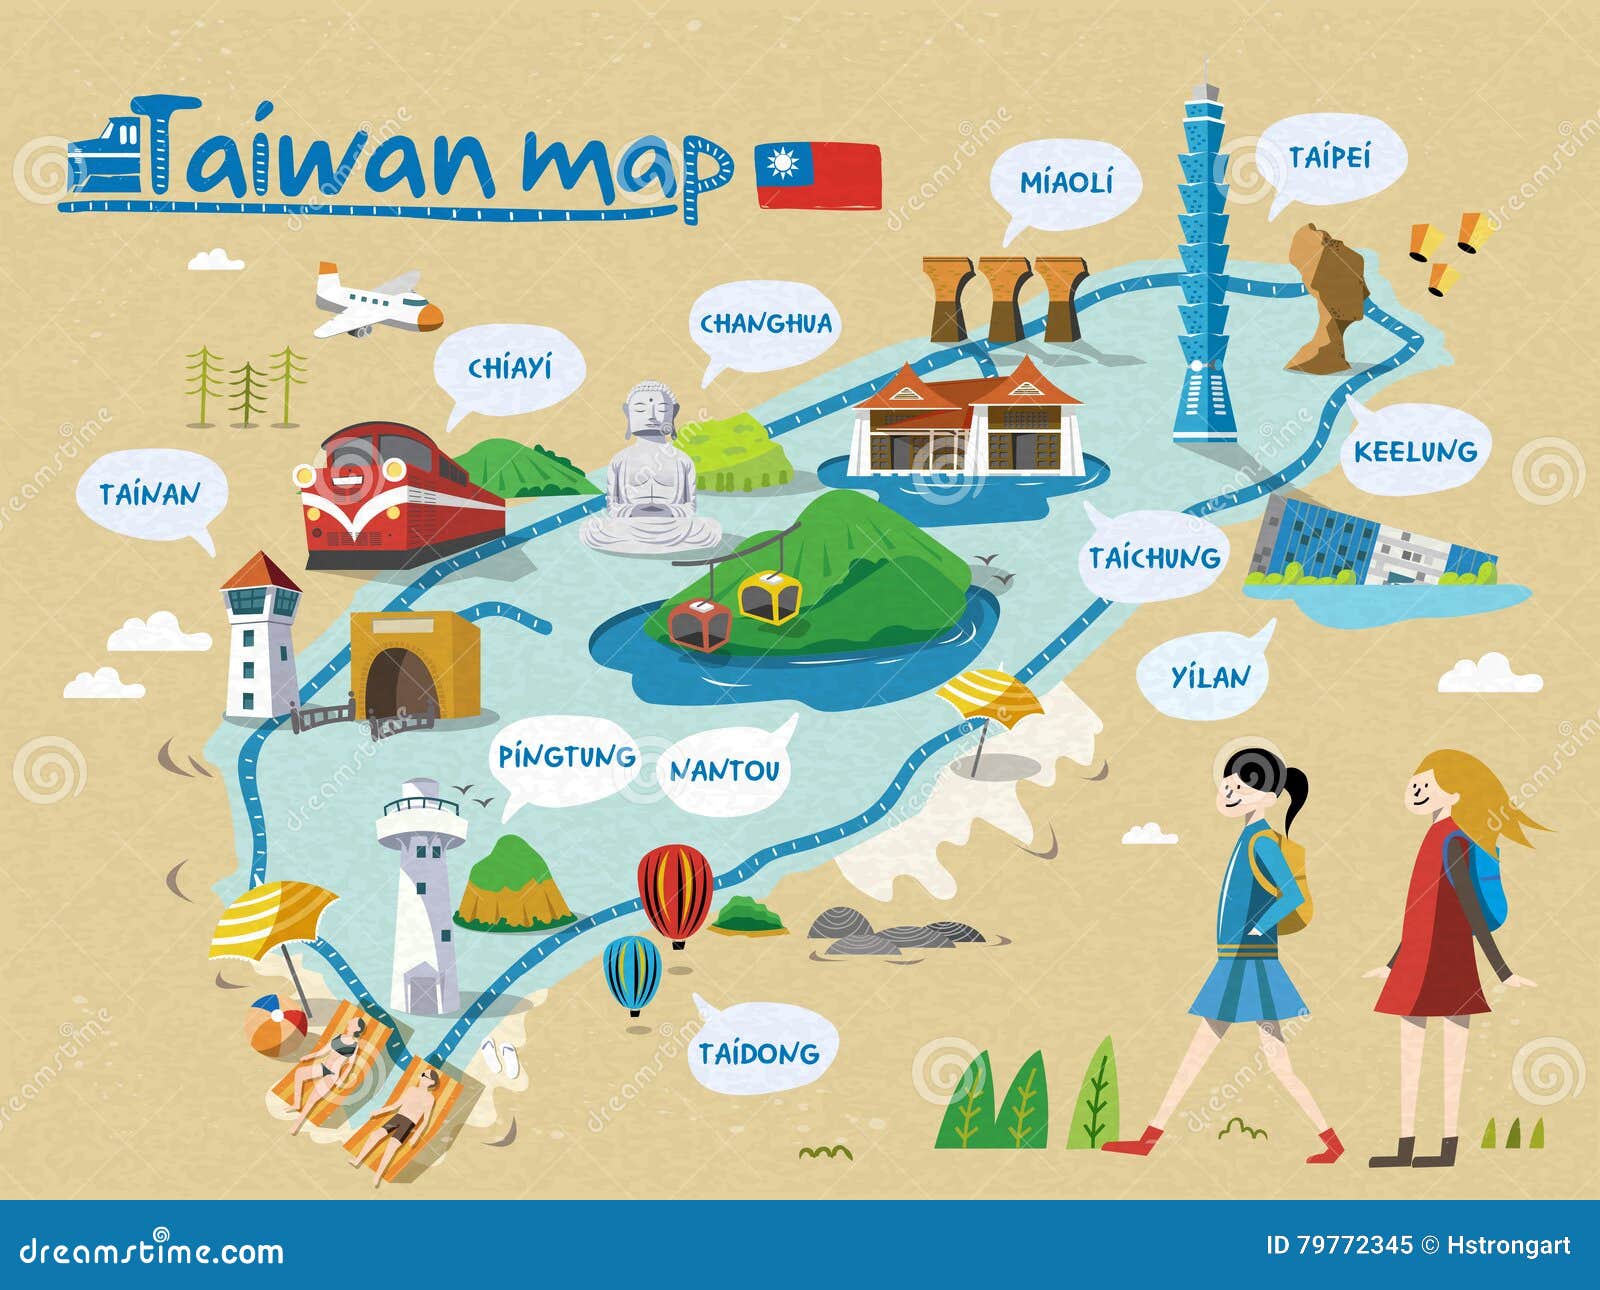 taiwan travel map